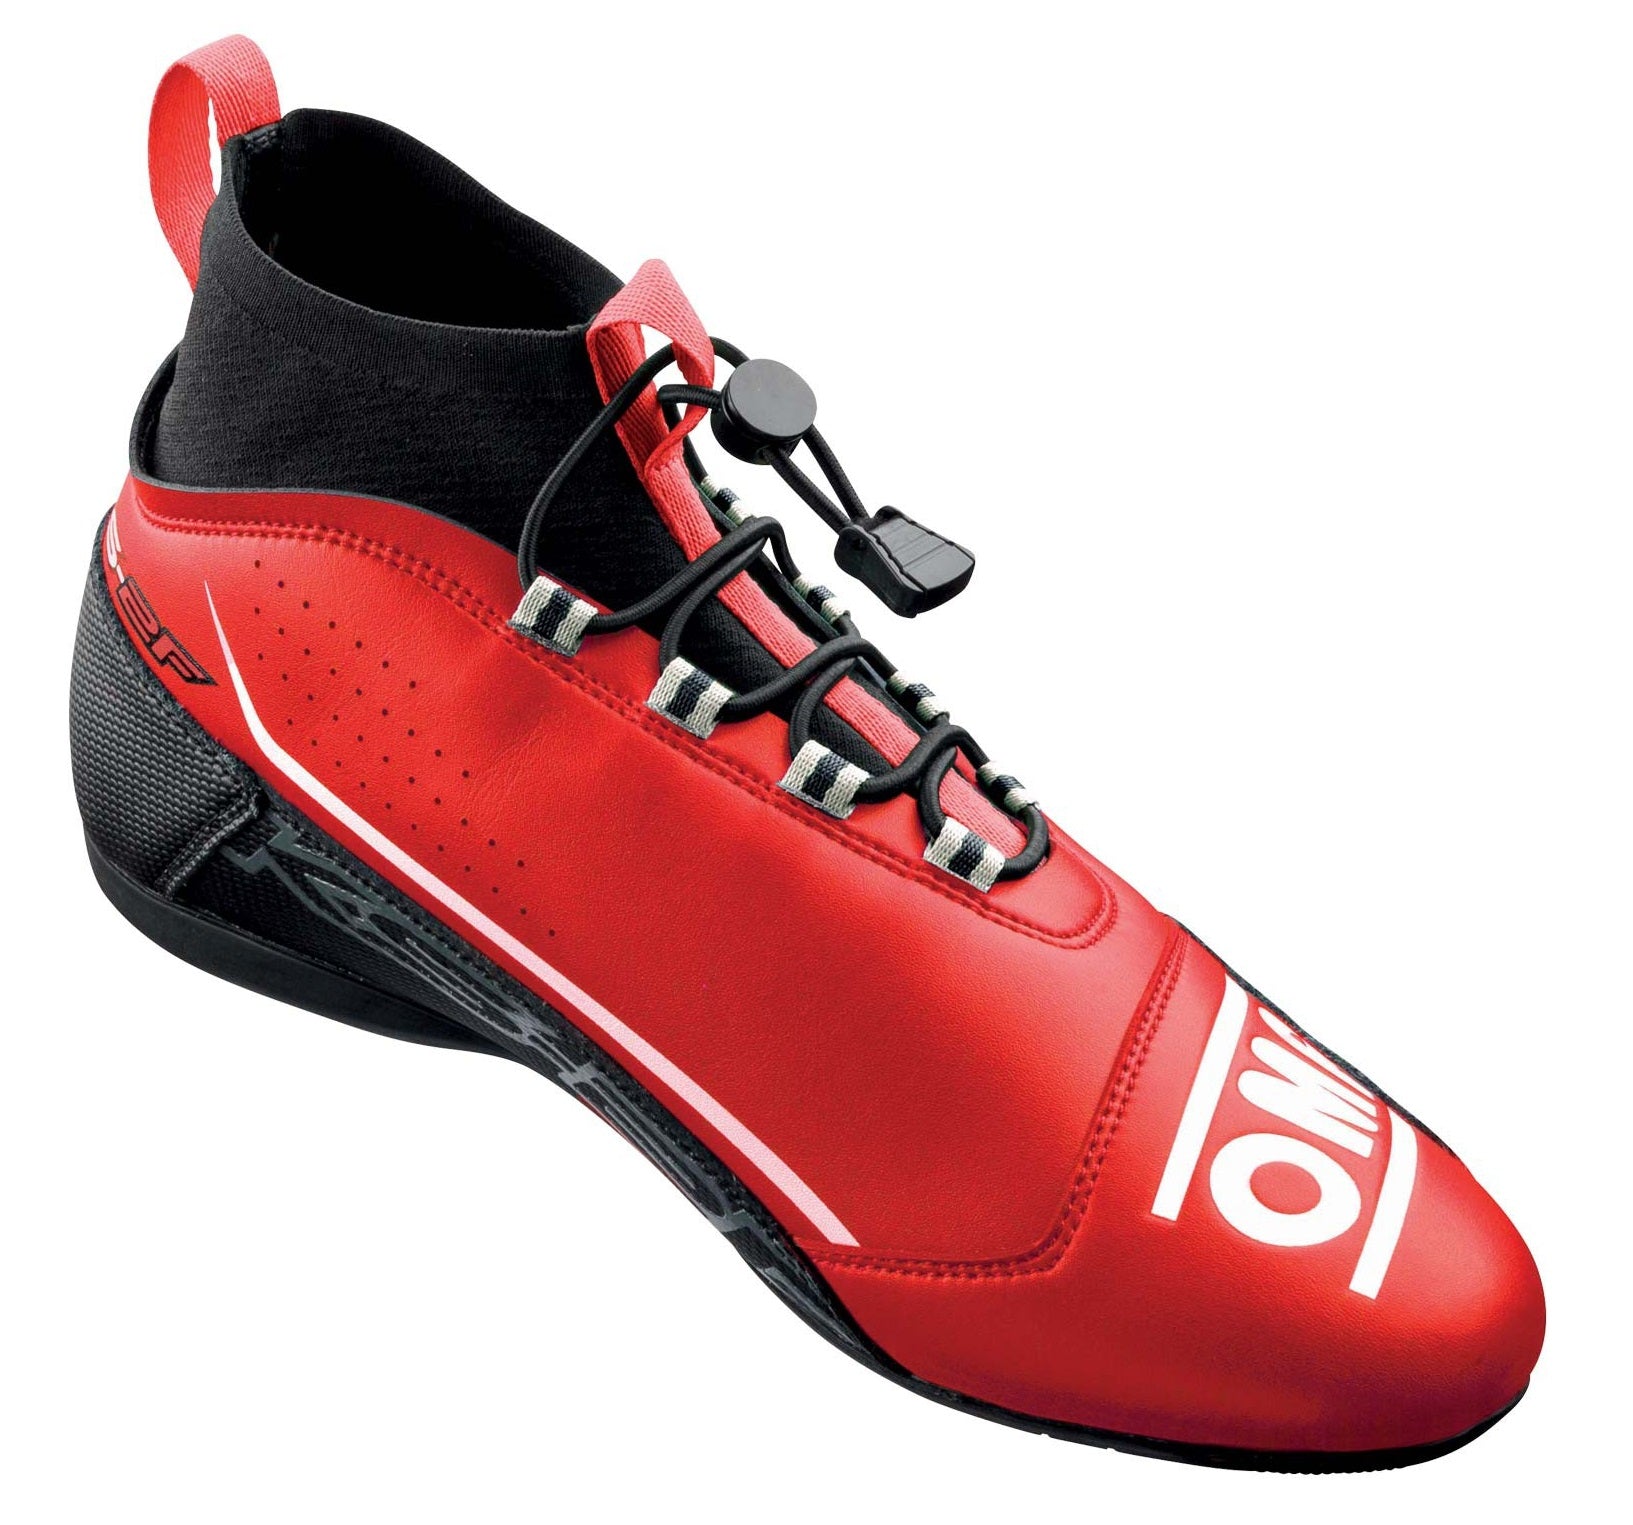 OMP KC0-0830-A01-060-34 KS-2F Karting shoes, children, red/black, size 34 Photo-1 